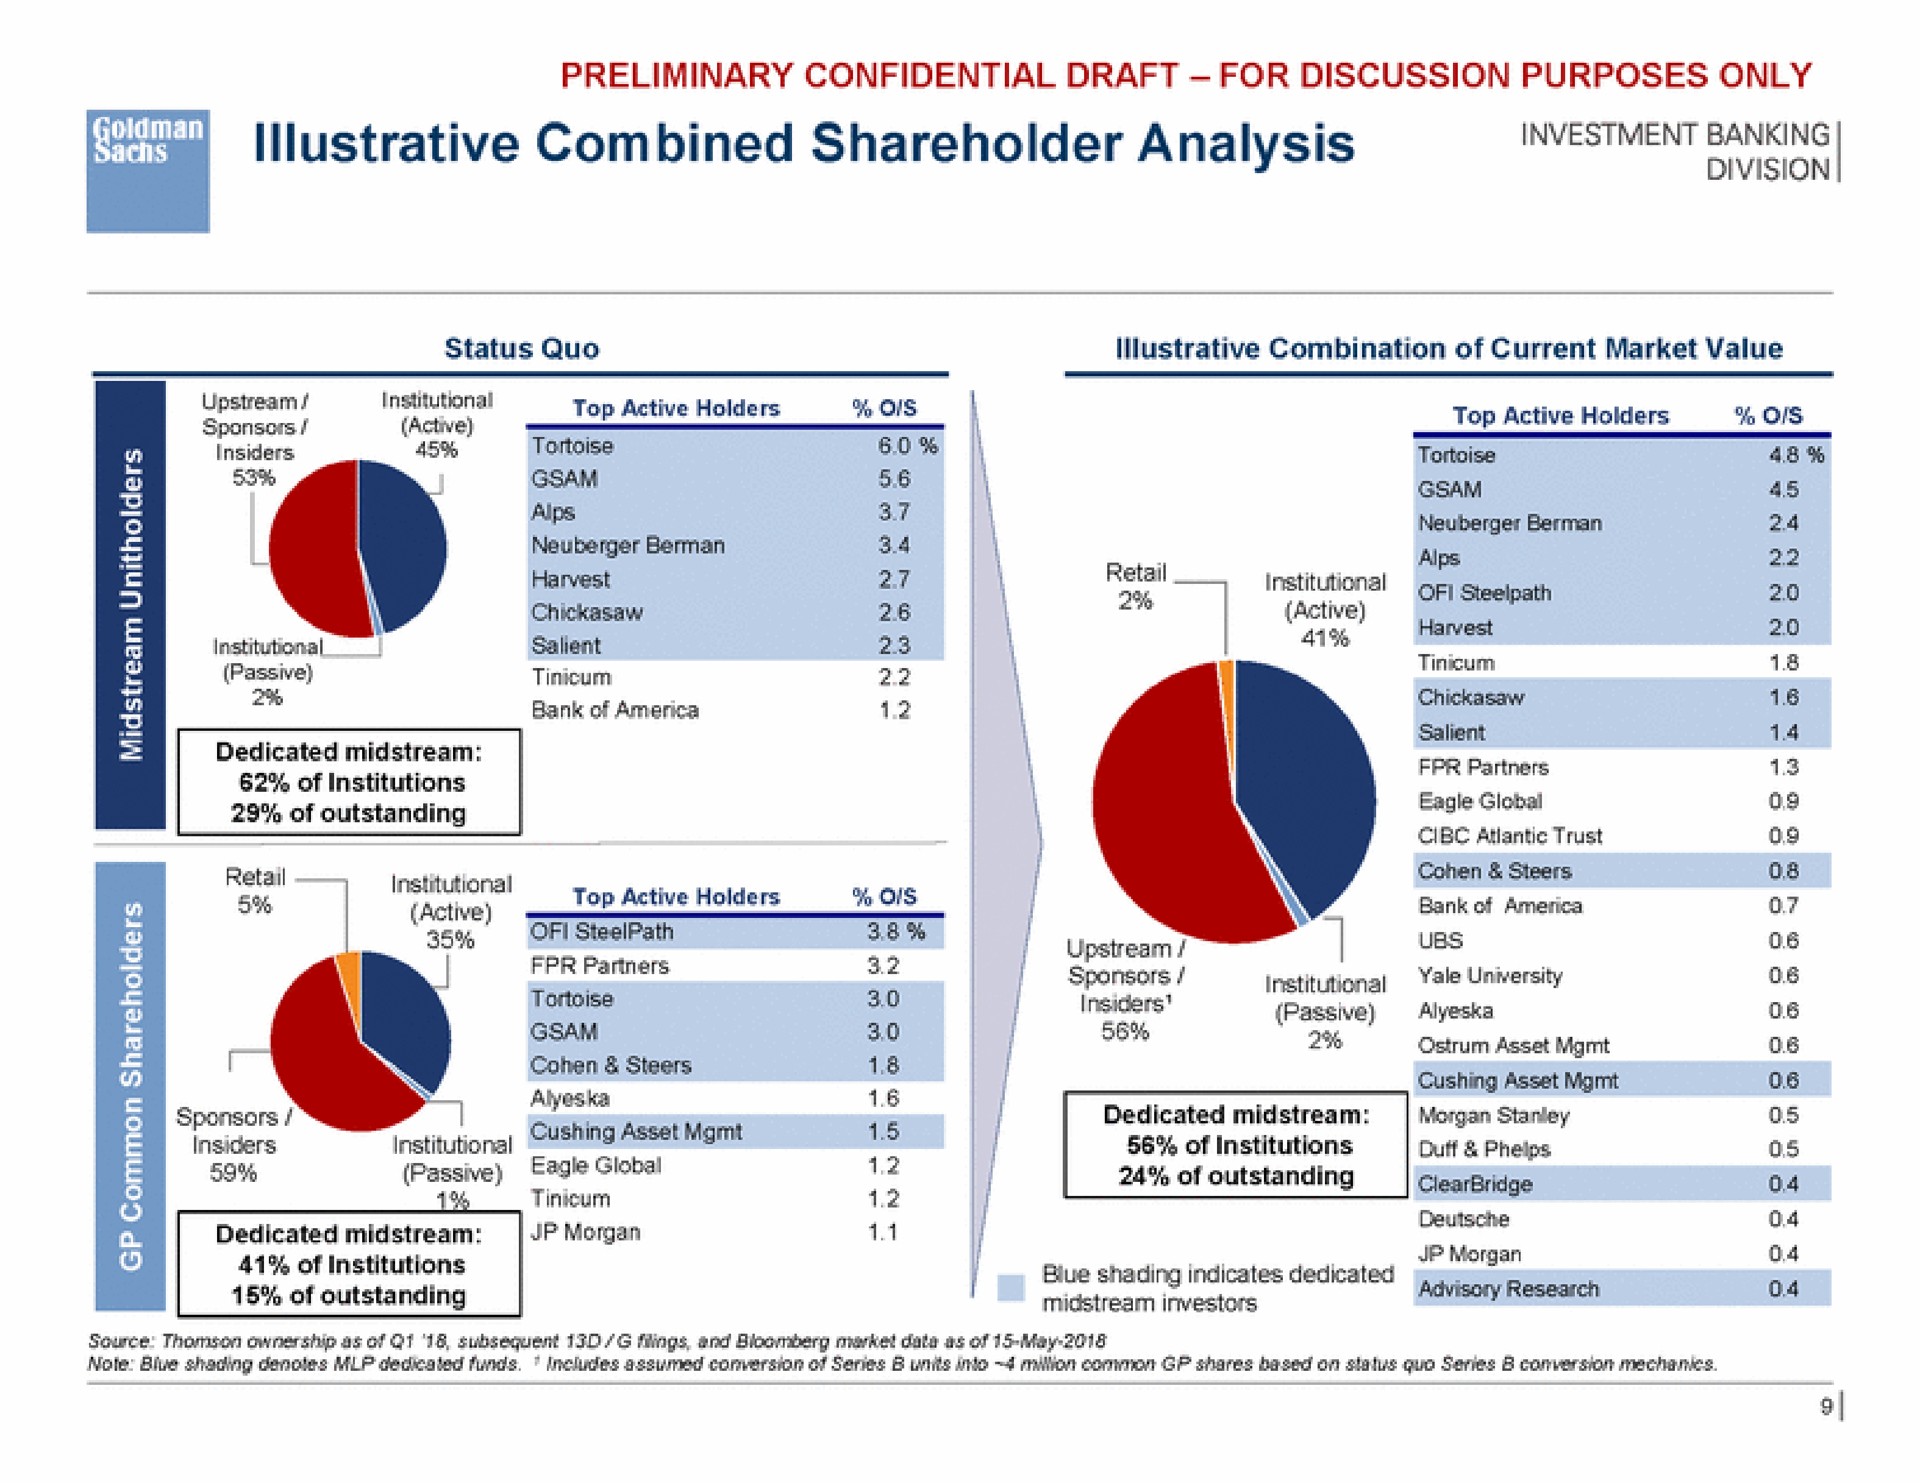 secs illustrative combined shareholder analysis of institutions | Goldman Sachs